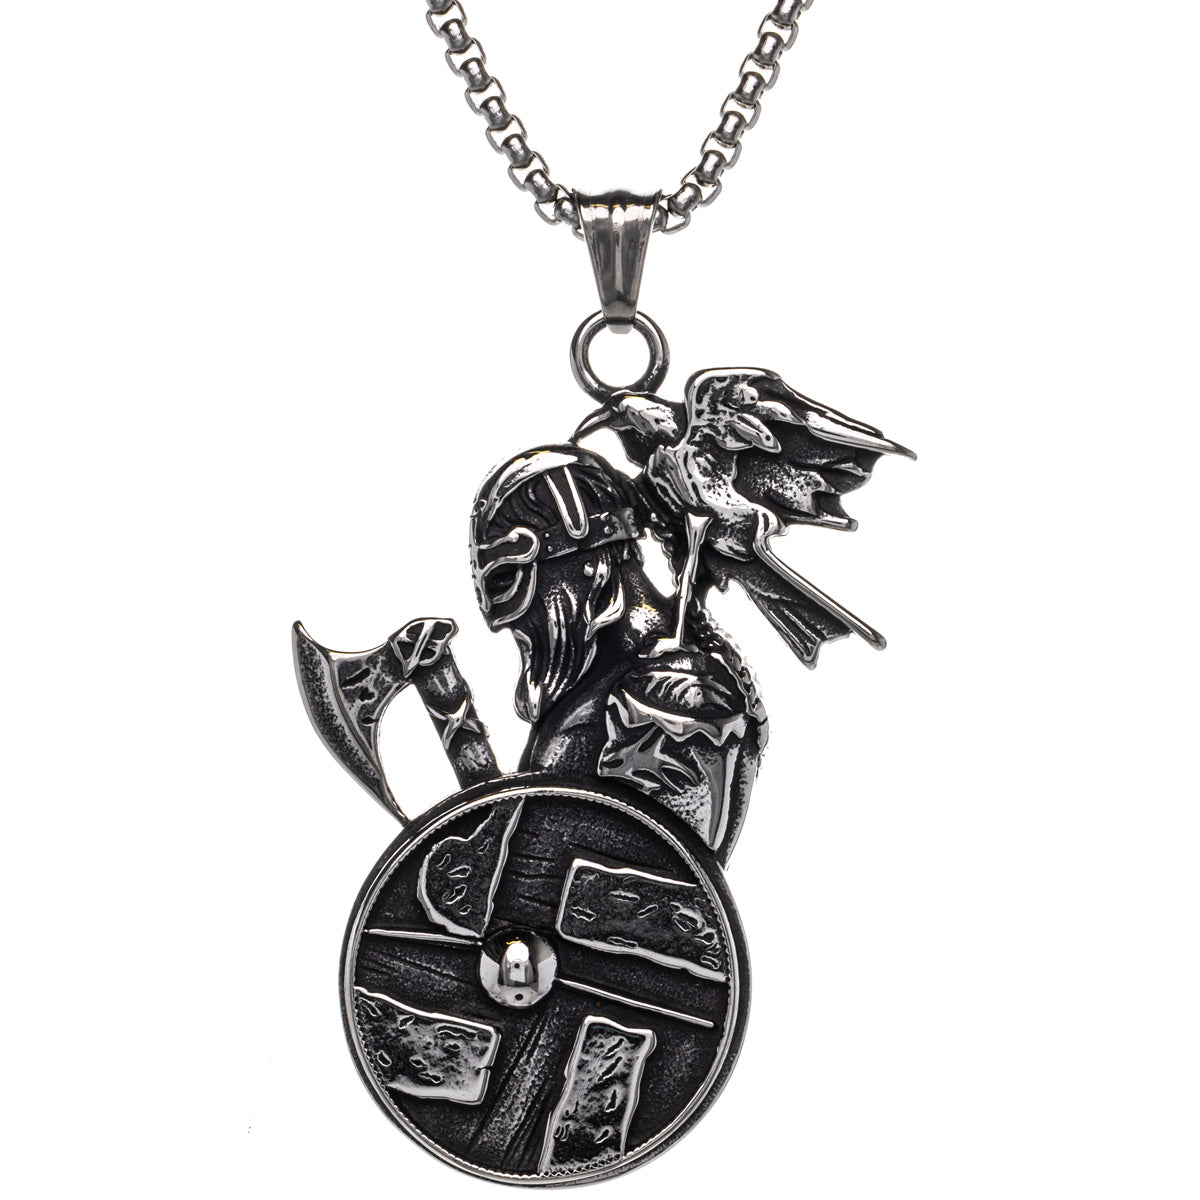 Berserker Viking fighter pendant necklace (Steel 316L)